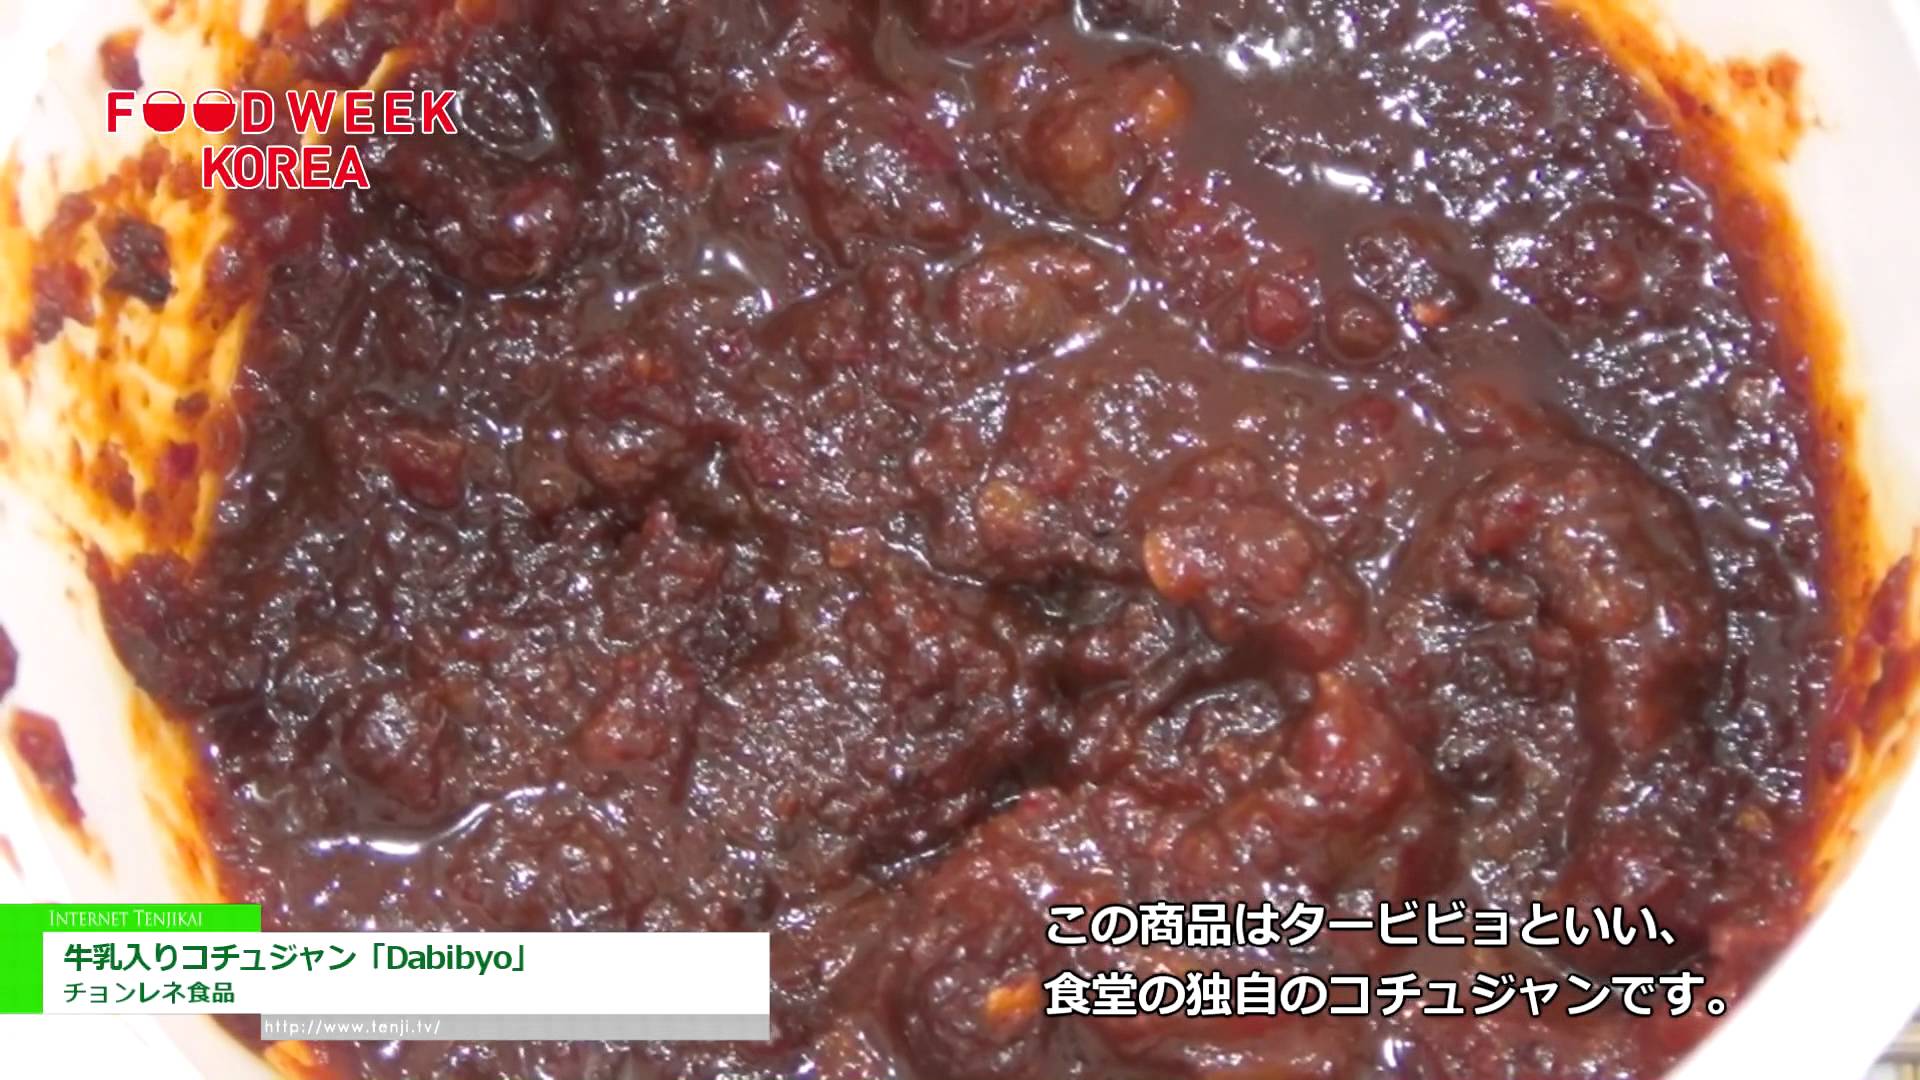 [Food Week Korea 2014] 牛乳入りコチュジャン「Dabibyo」 - チョンレネ食品